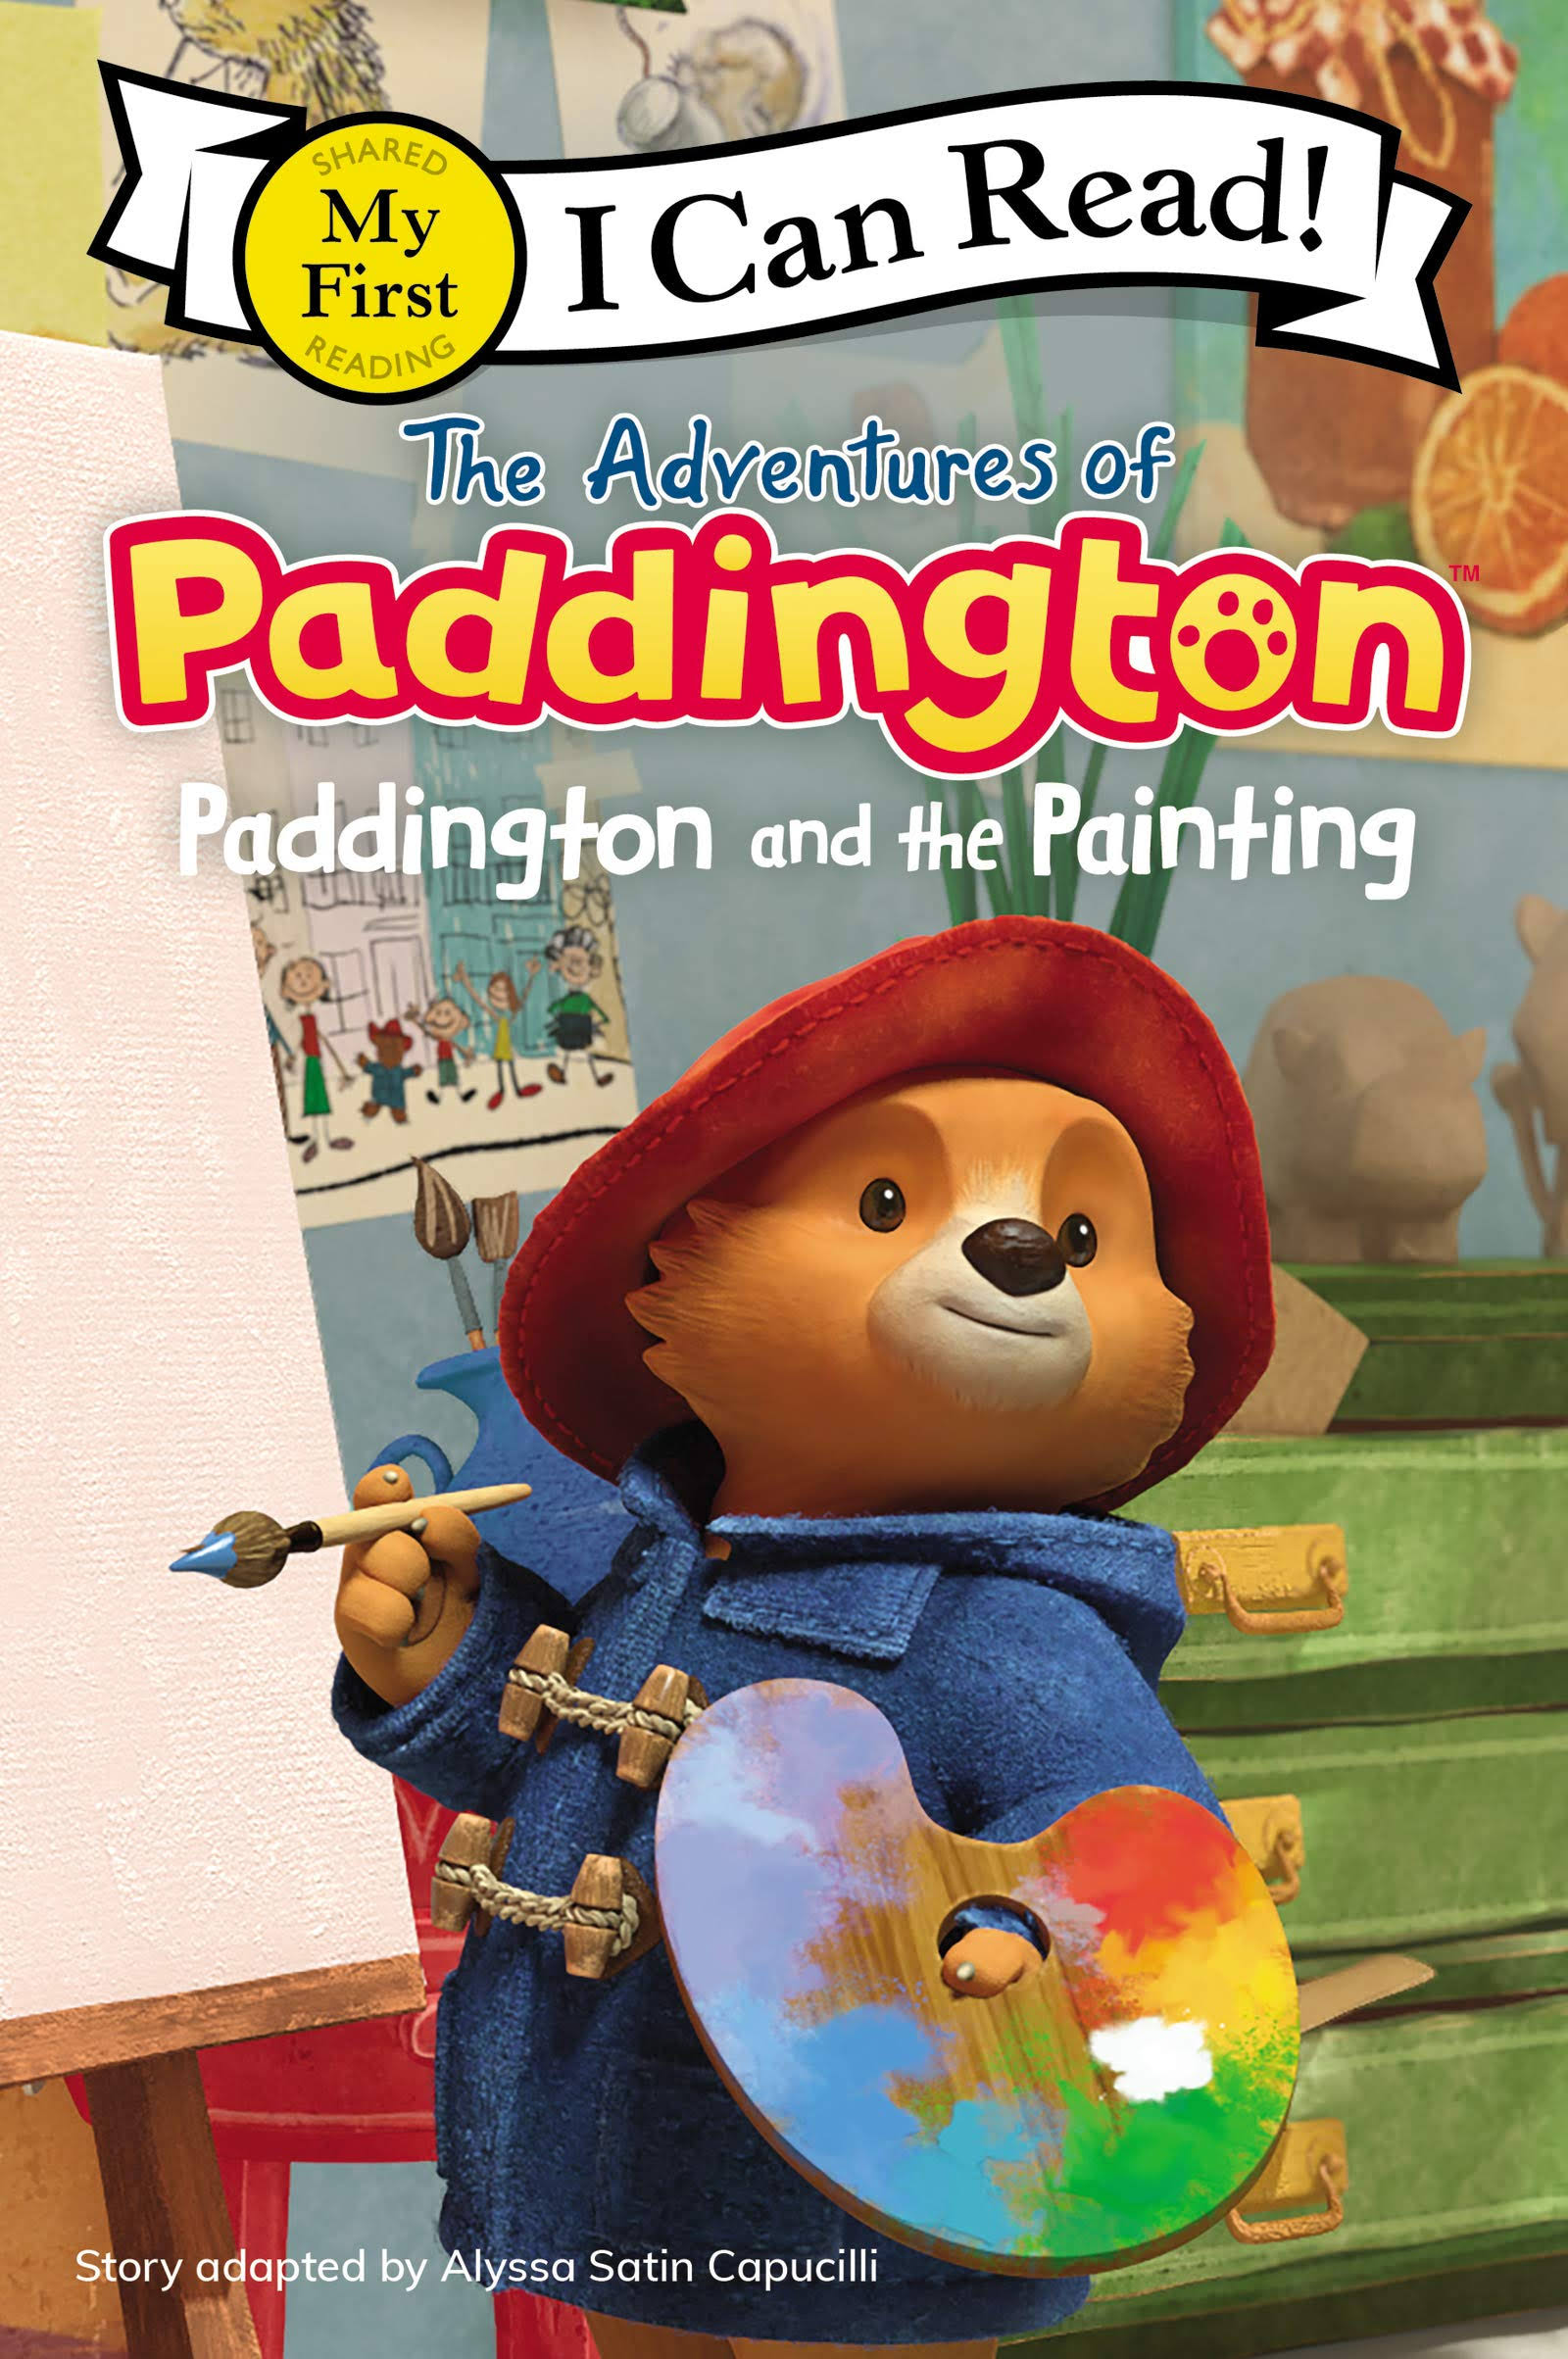 The Adventures of Paddington Paddington and the Painting by Alyssa Satin Capucilli